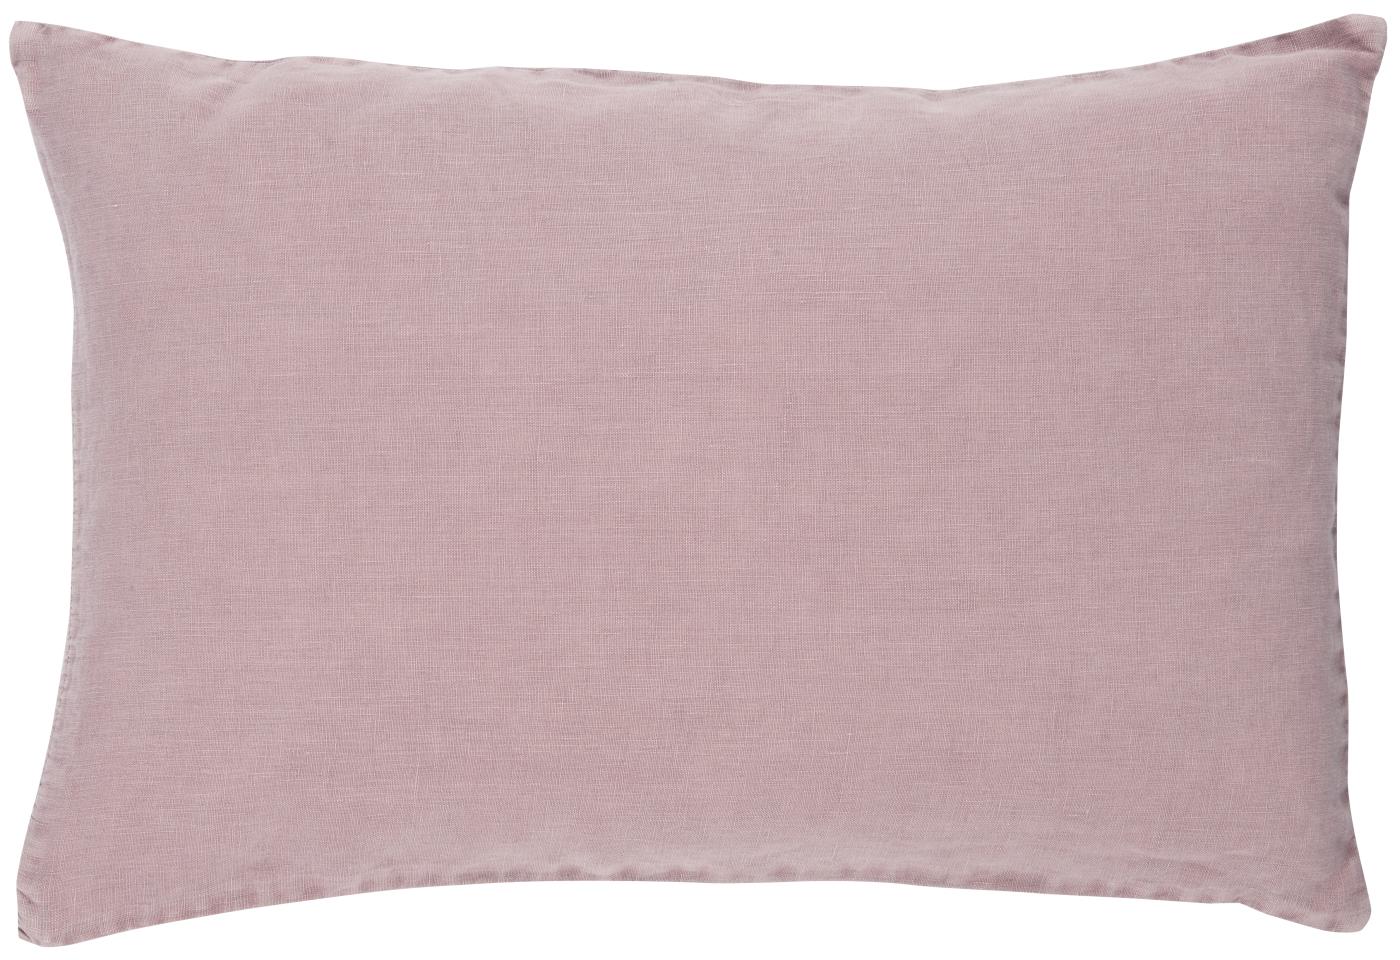 Ib Laursen Light Rose Linen Cushion Cover